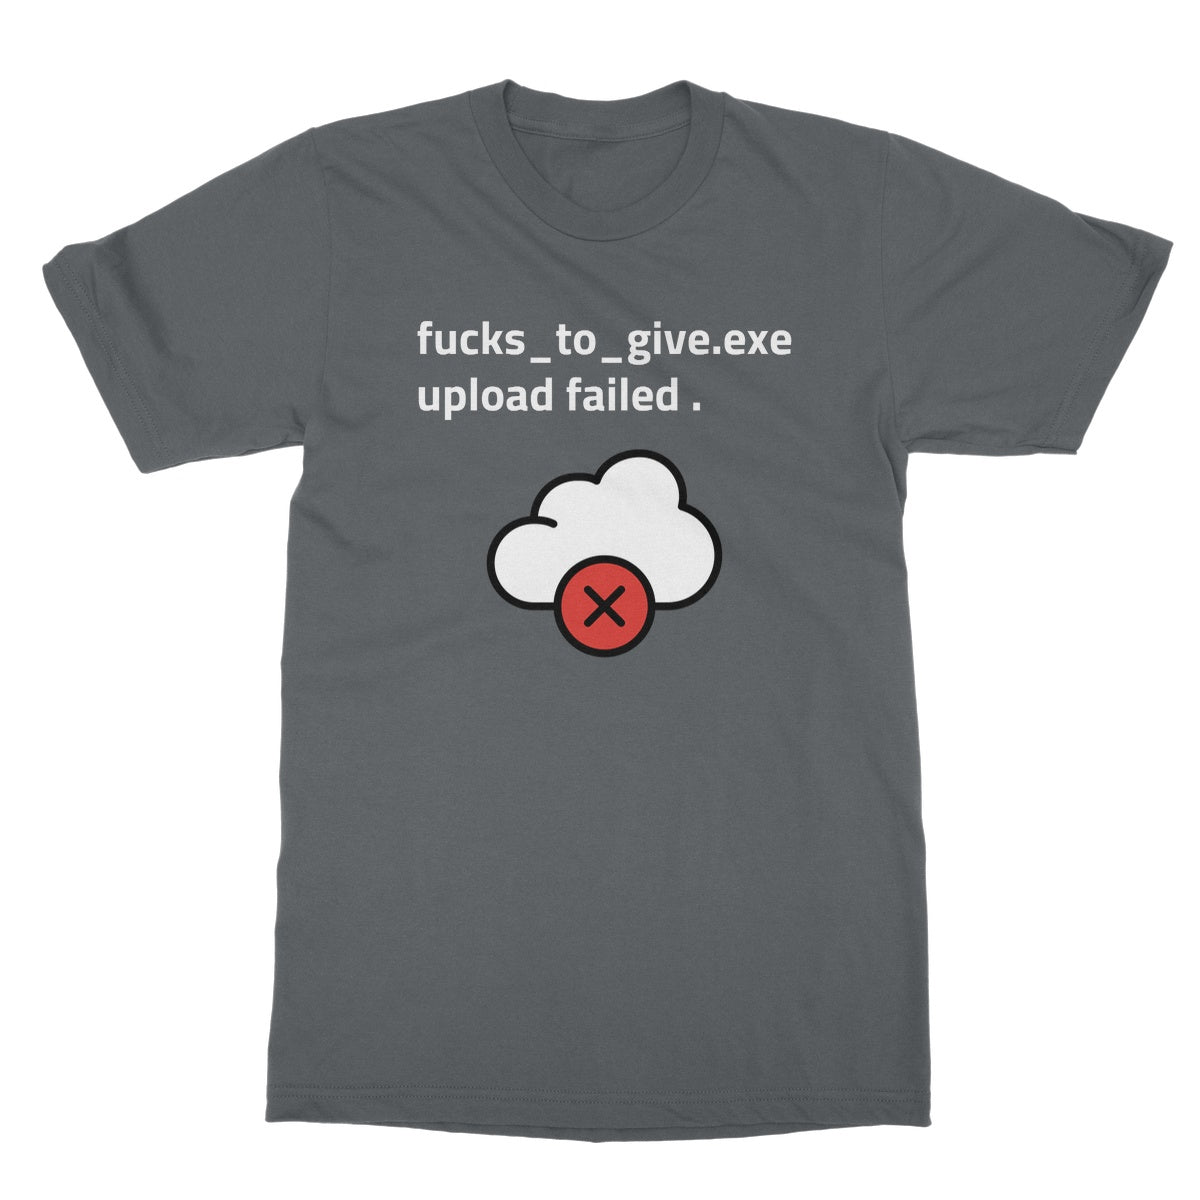 fucks to give upload failed t shirt grey